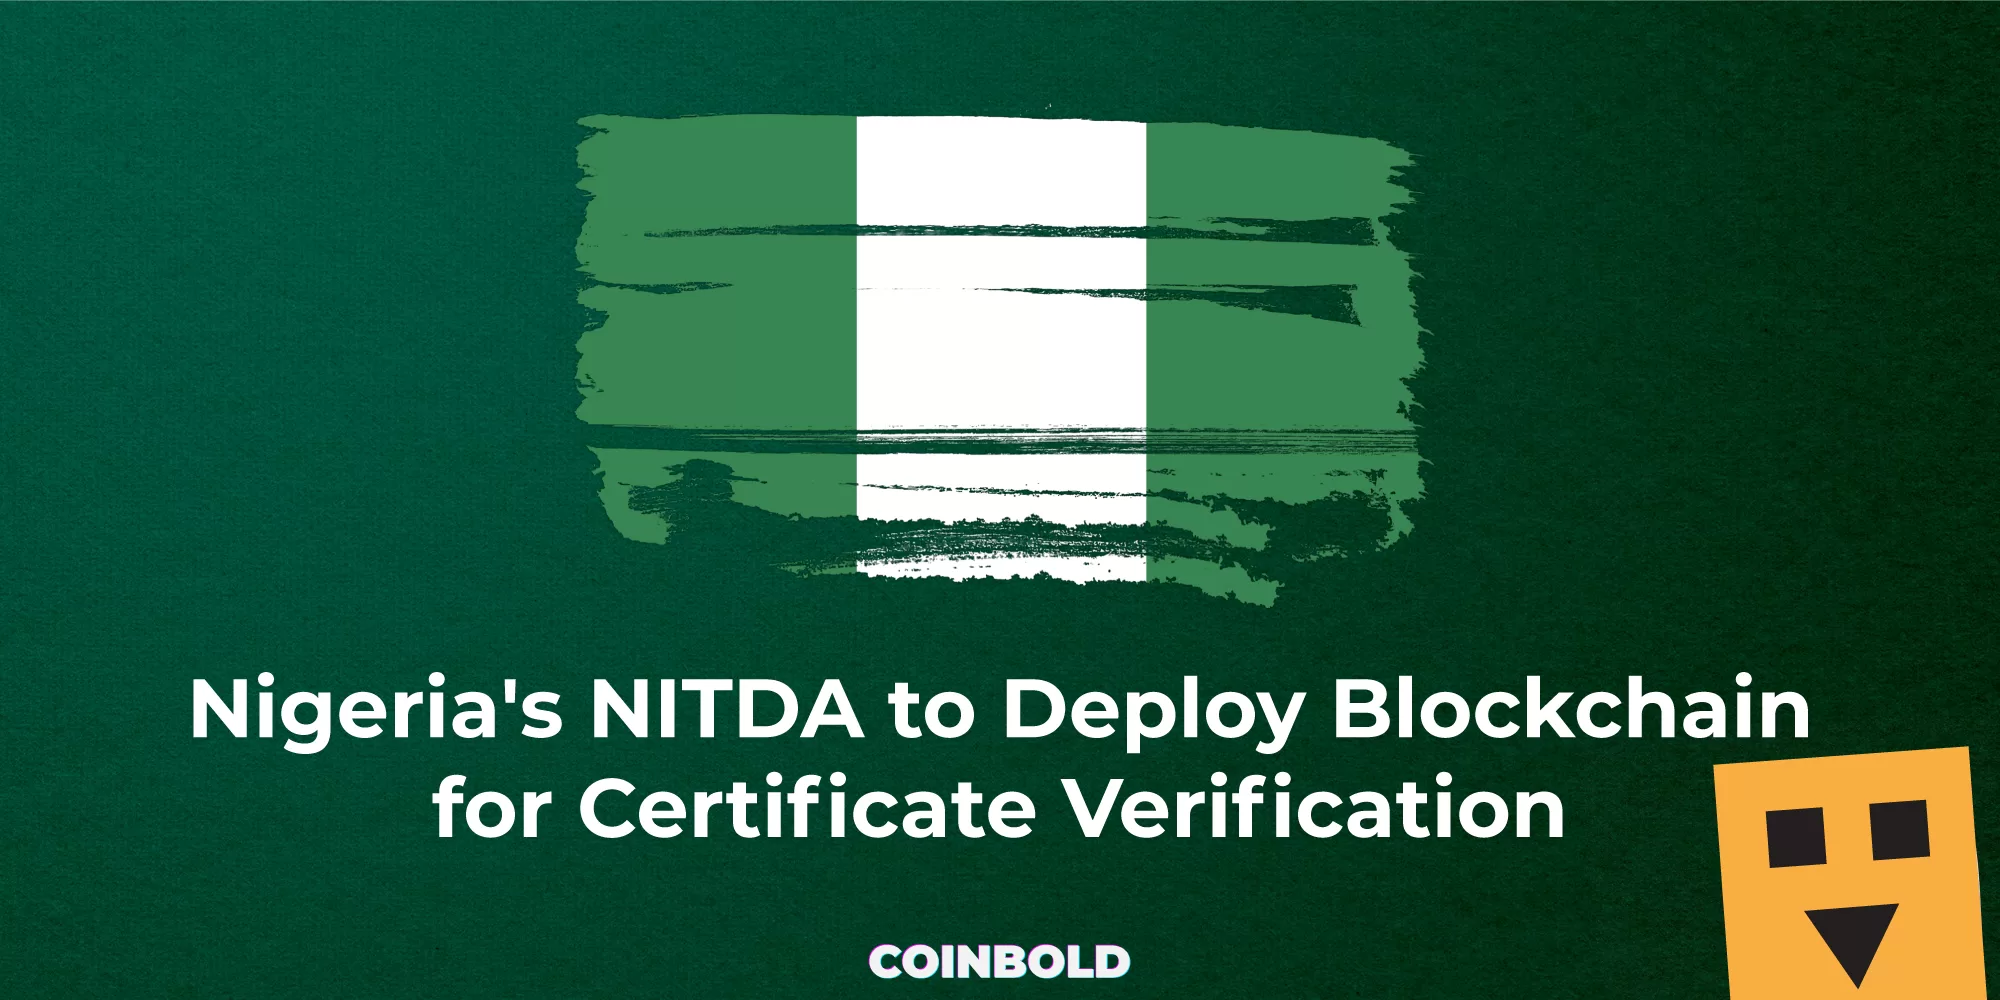 Nigeria's NITDA to Deploy Blockchain for Certificate Verification